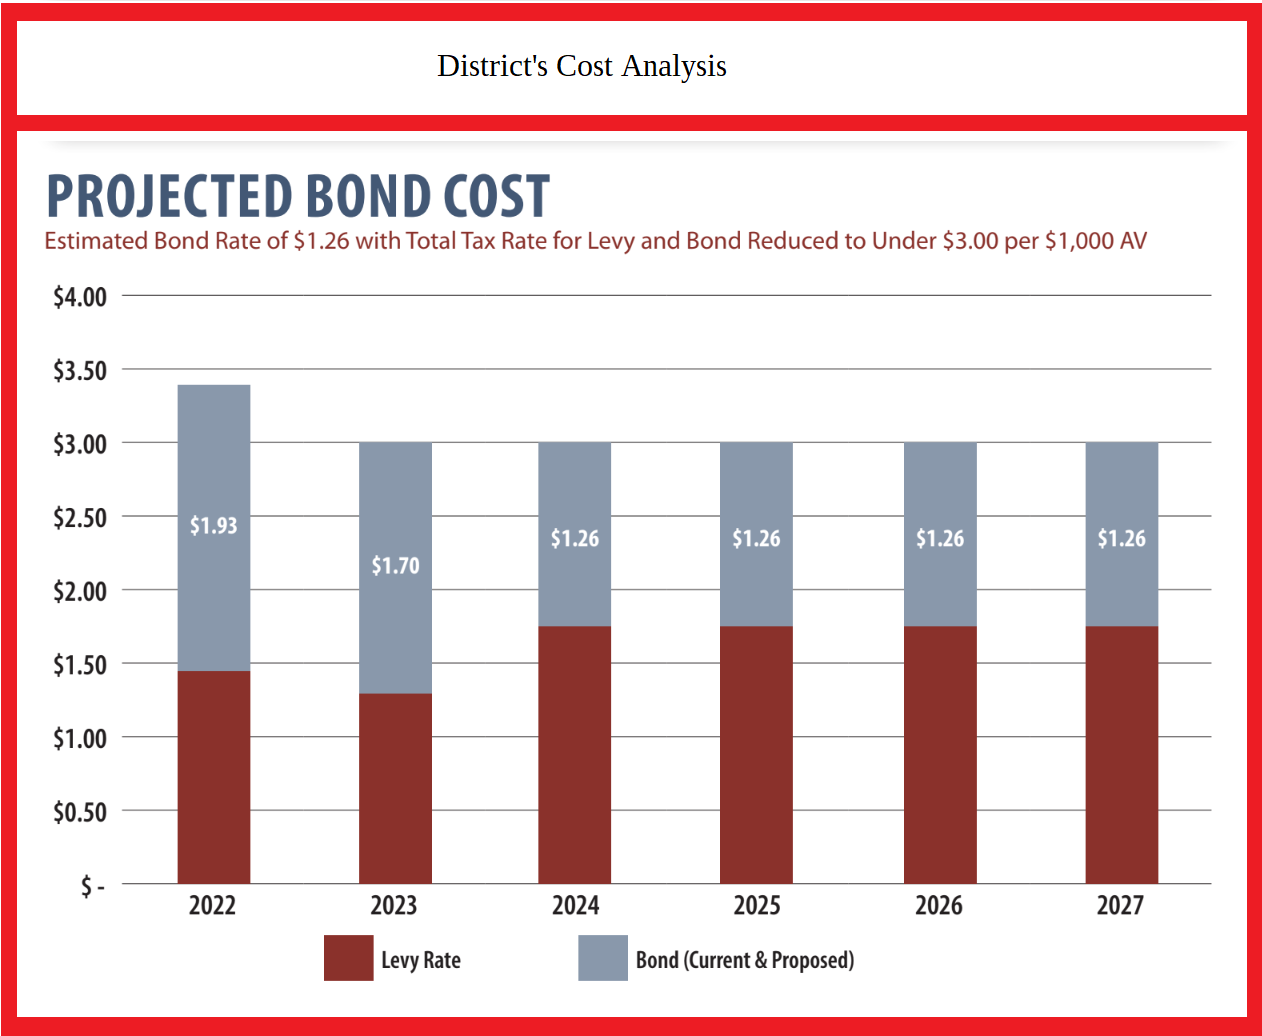 Steilacoom SD's bond cost analysis